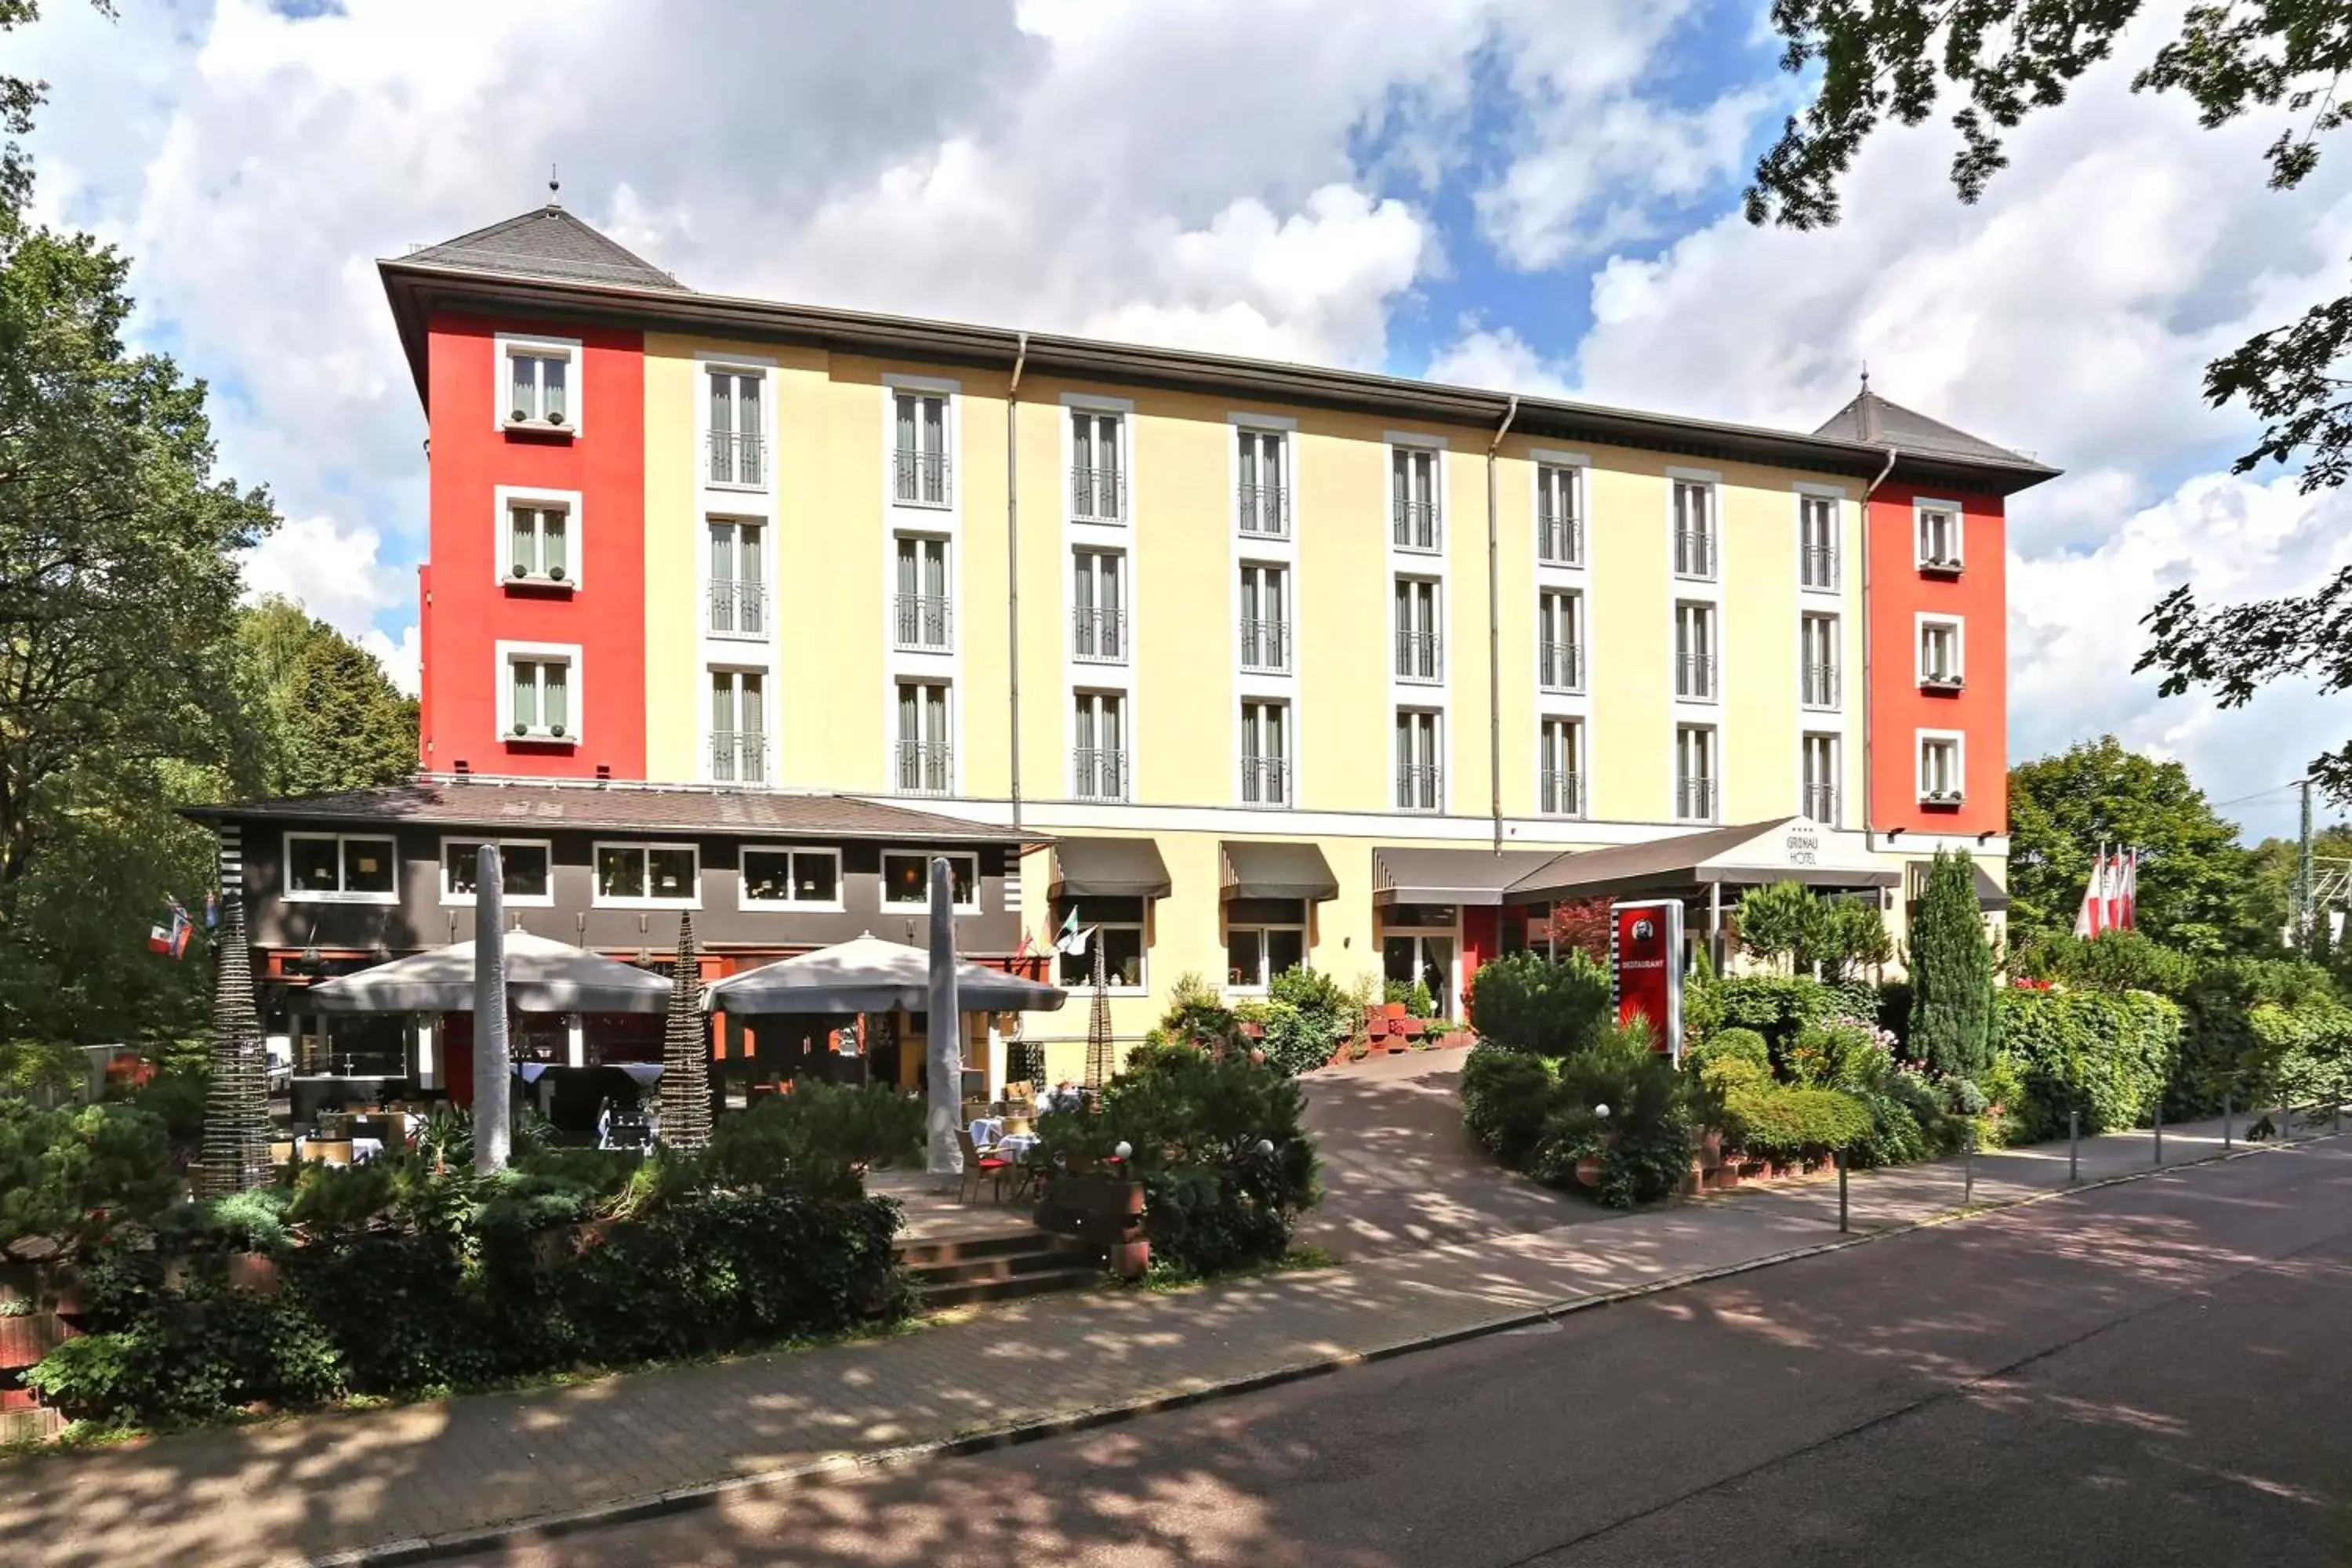 On site, Property Building in Grünau Hotel